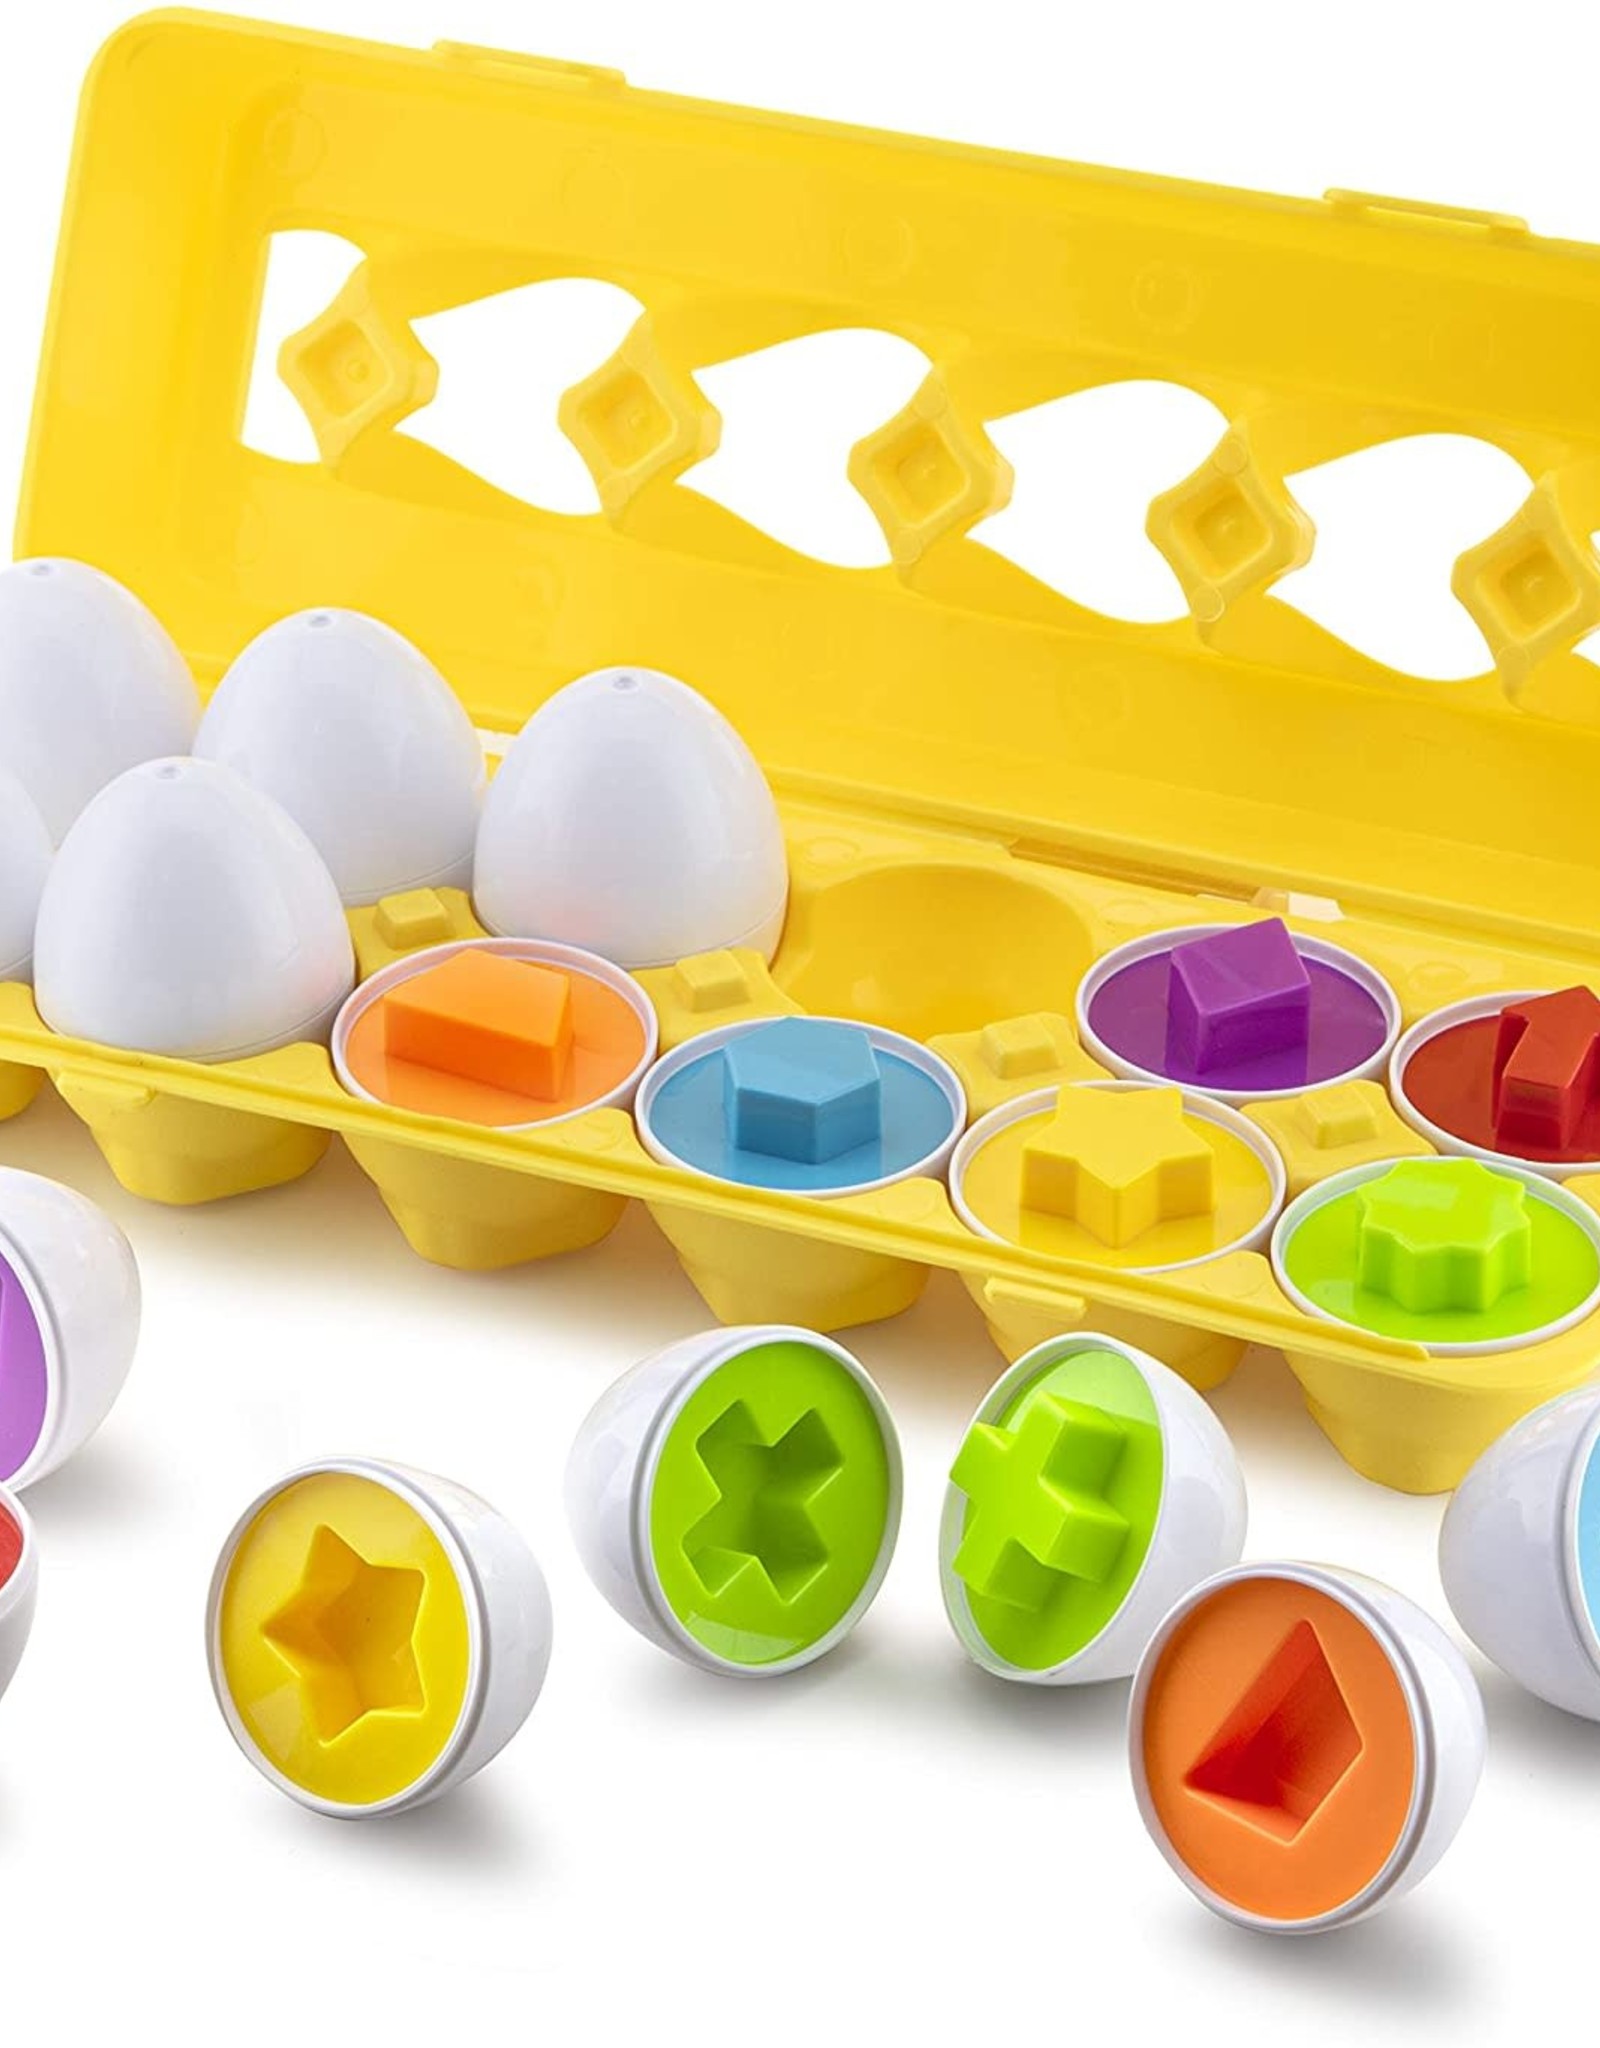 Matching Eggs Shape & Color